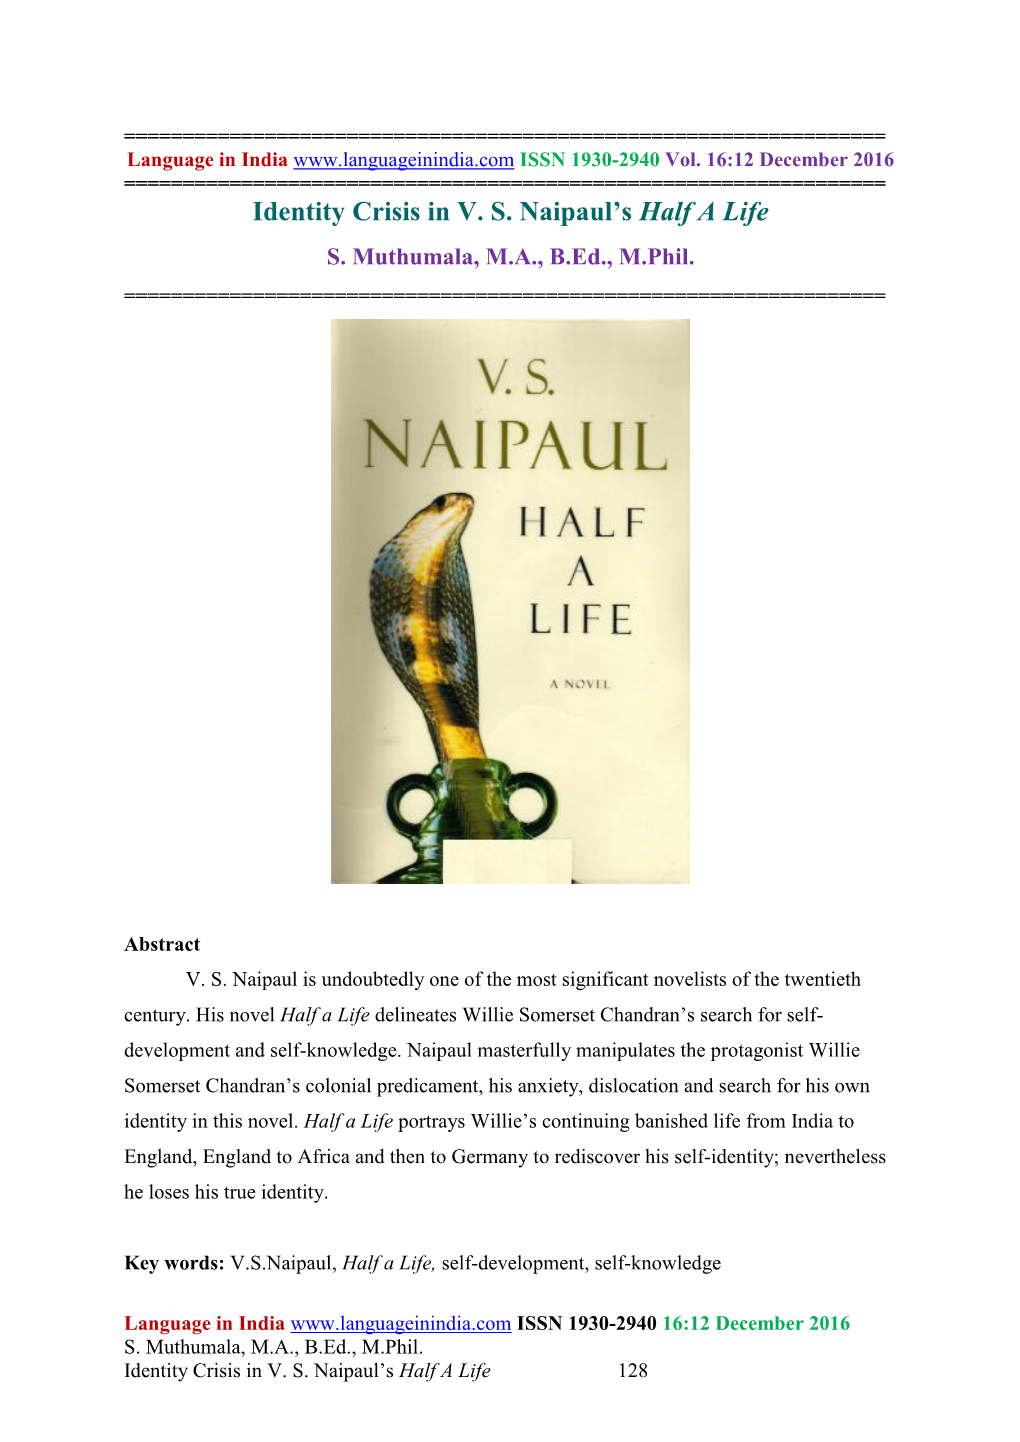 Identity Crisis in V. S. Naipaul's Half a Life